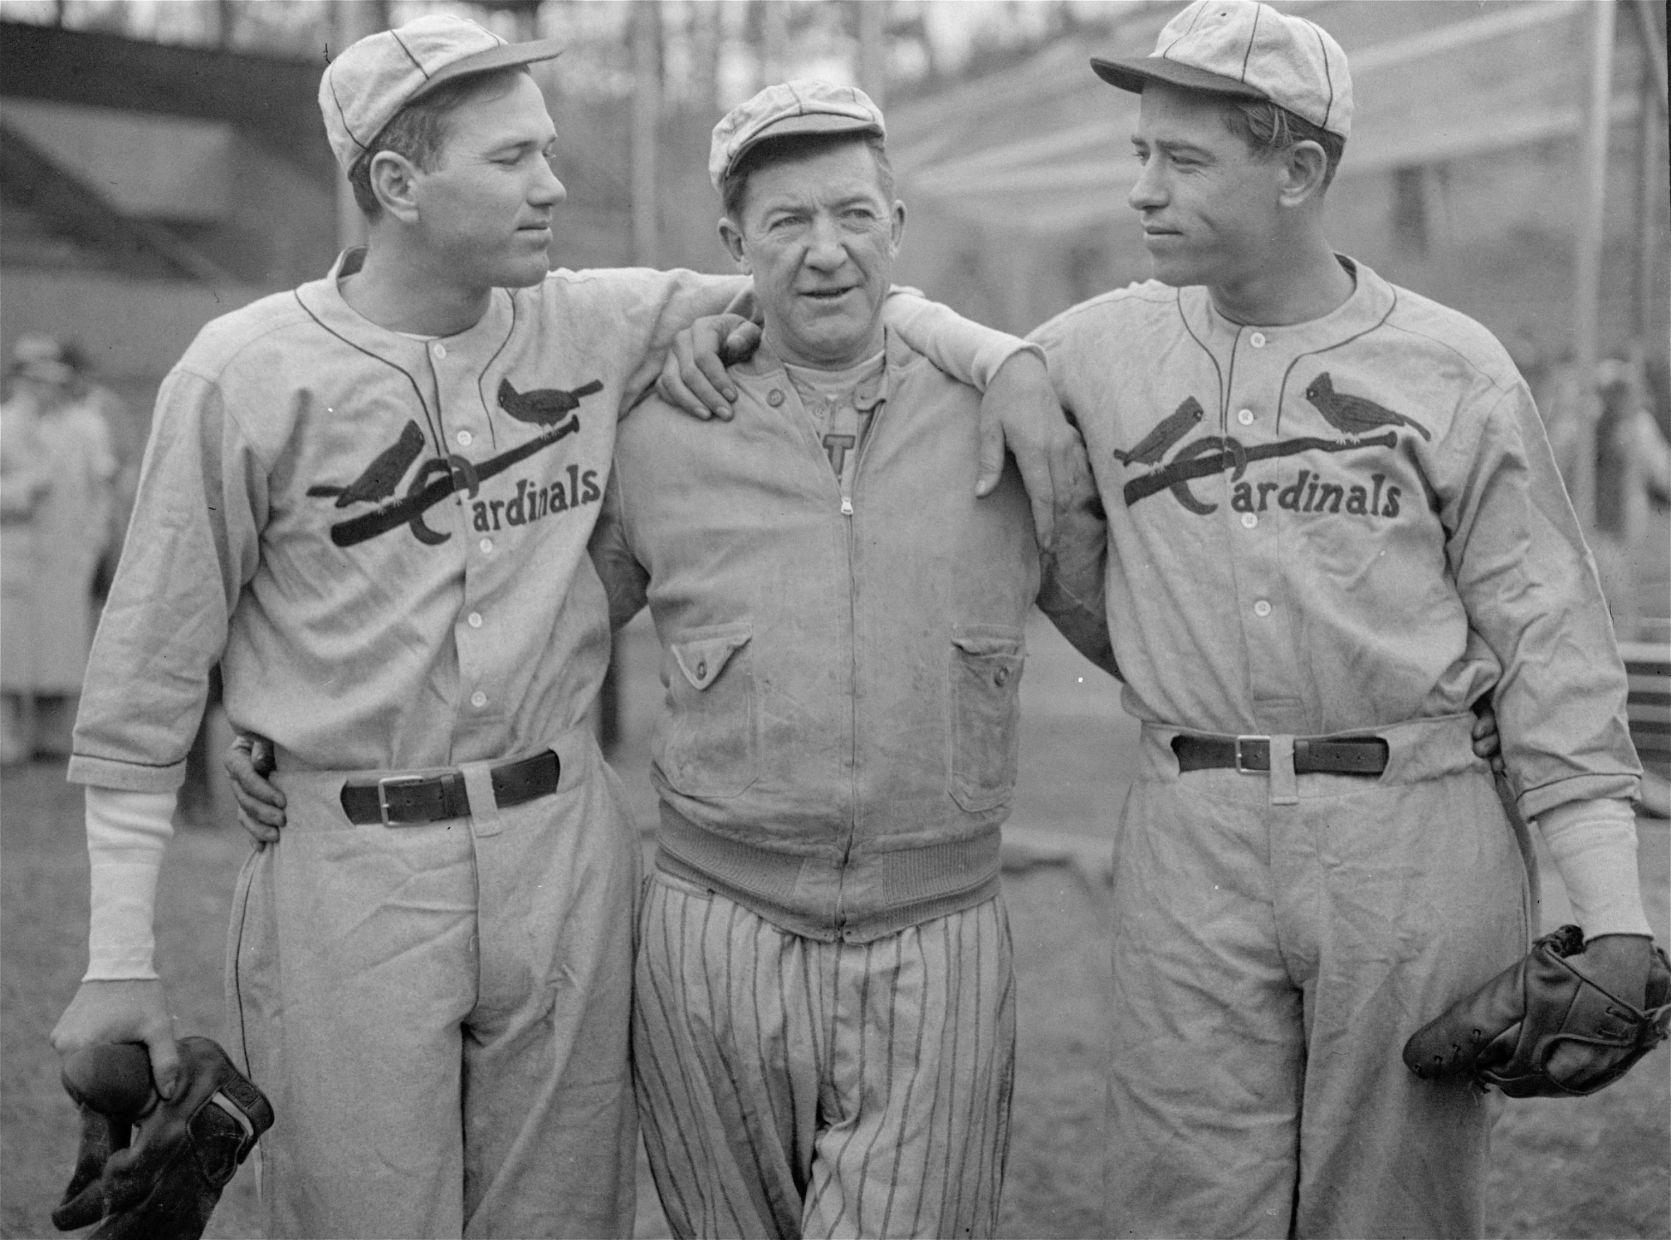 1935: Star pitchers